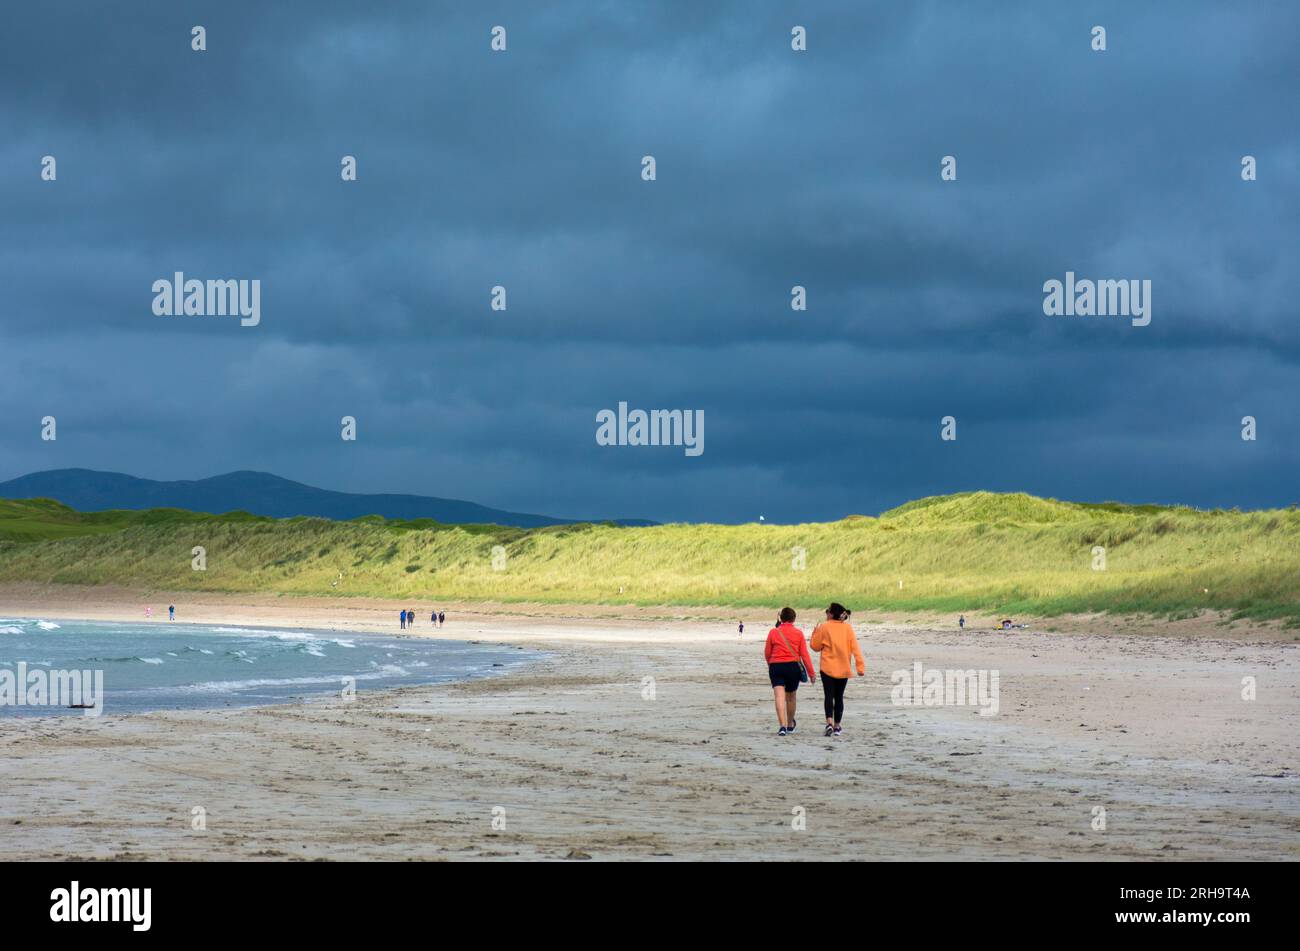 Narin Strand or beach, near Portnoo, Ardara, County Donegal, Ireland. A blue flag beach on the Wild Atlantic Way coast. Stock Photo